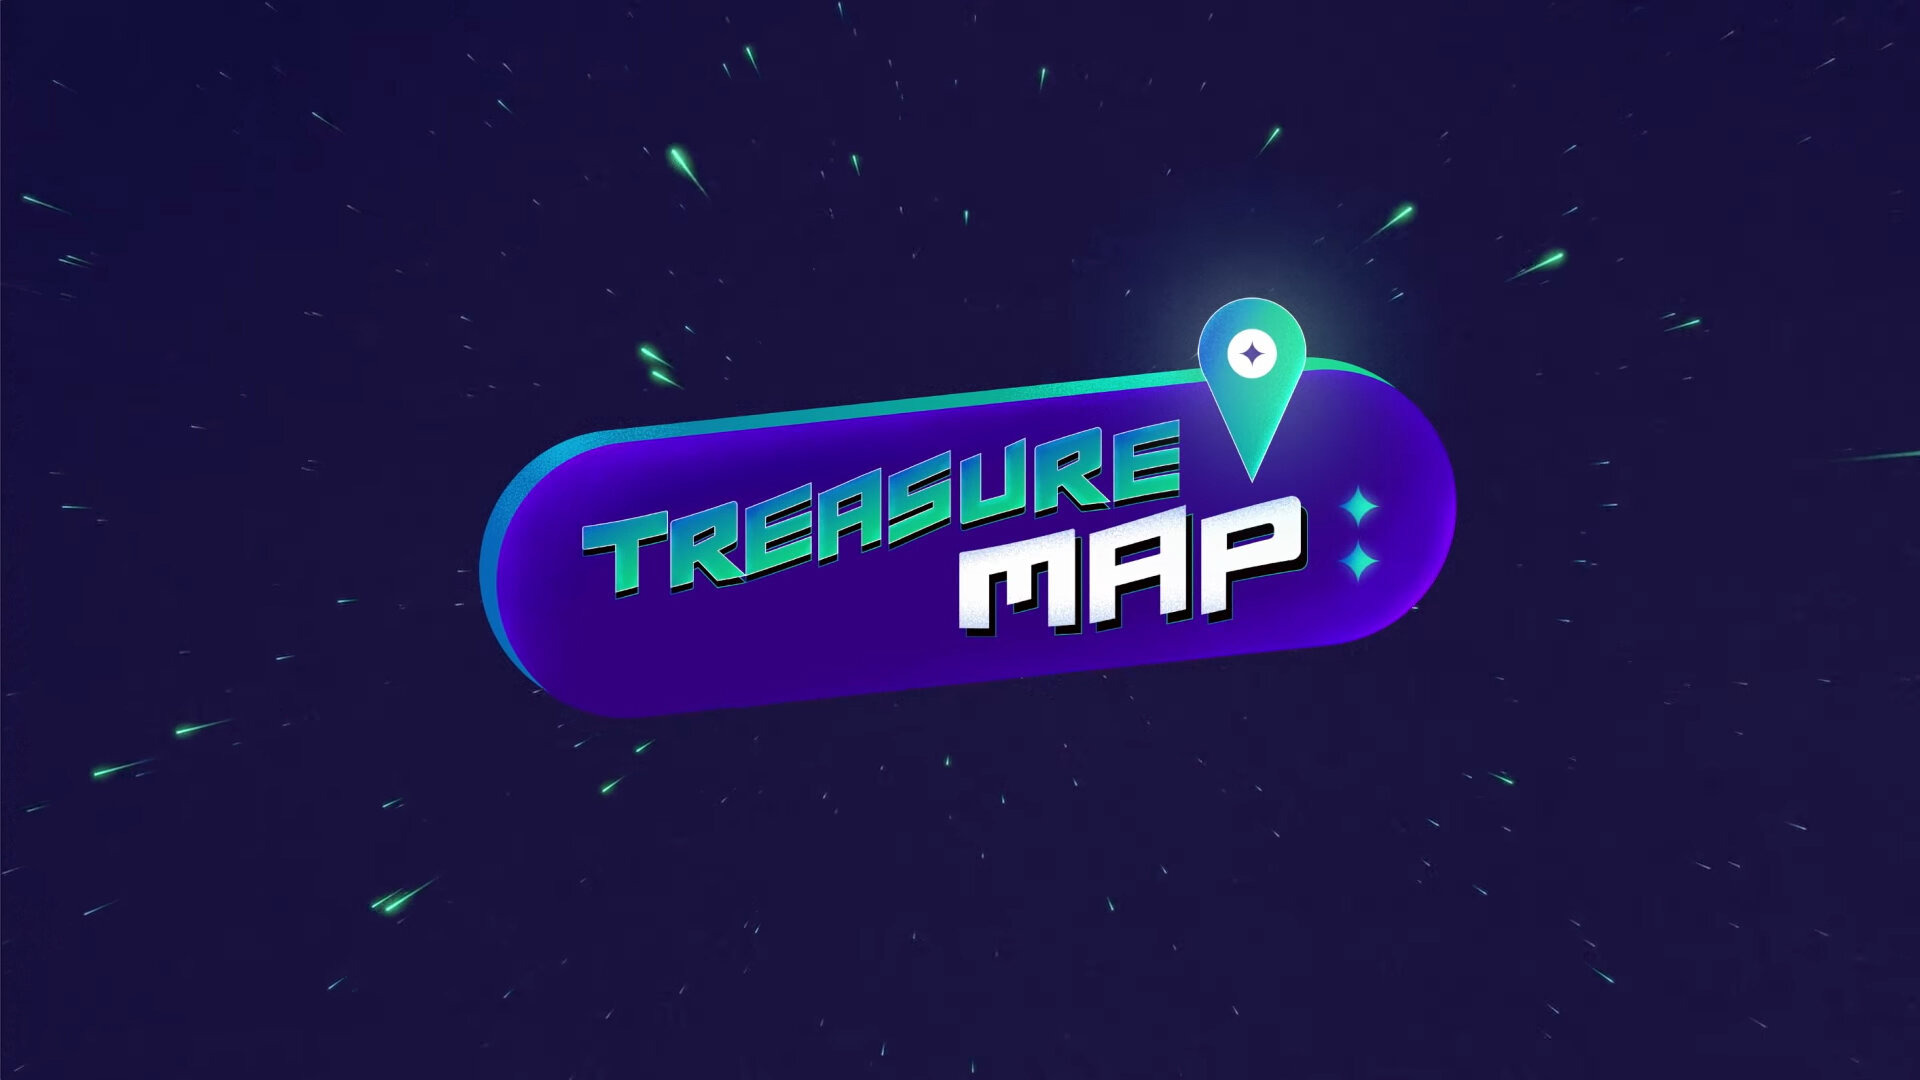 Show Treasure Map